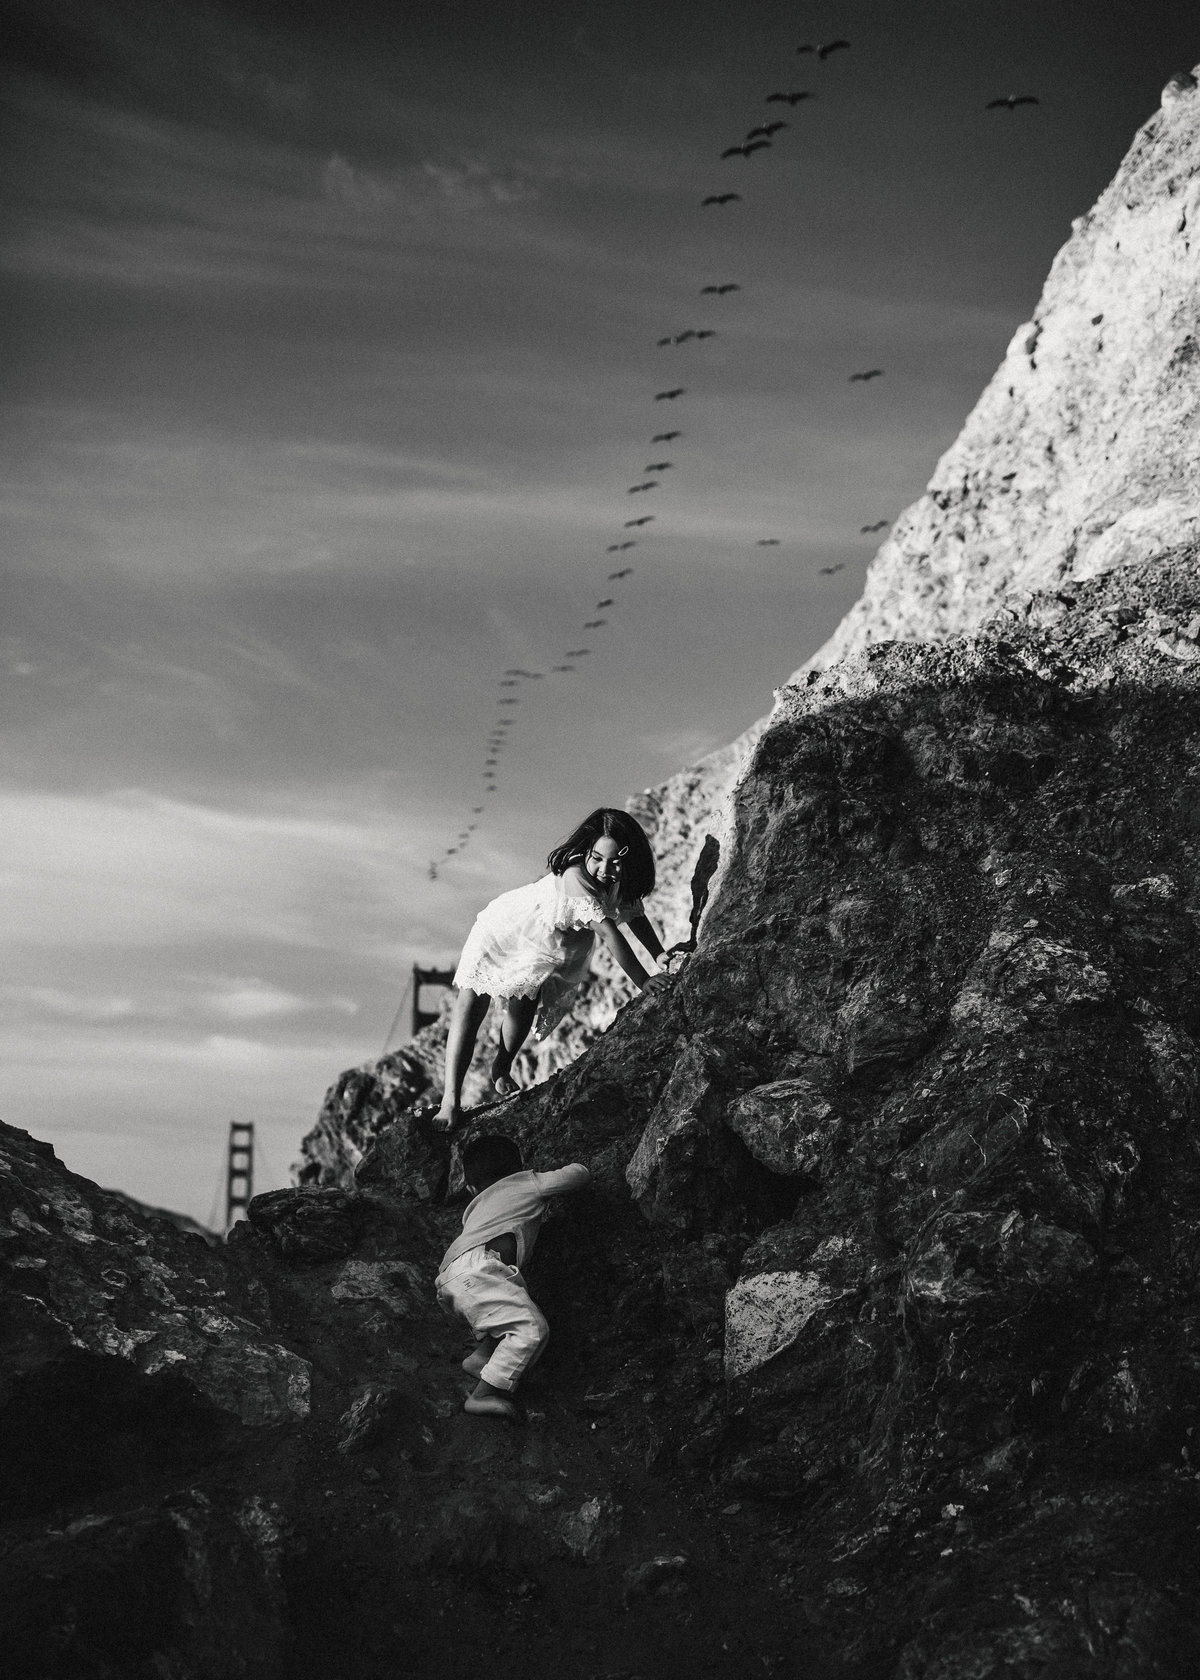 Kids climbing rocks at beach with birds flying overhead